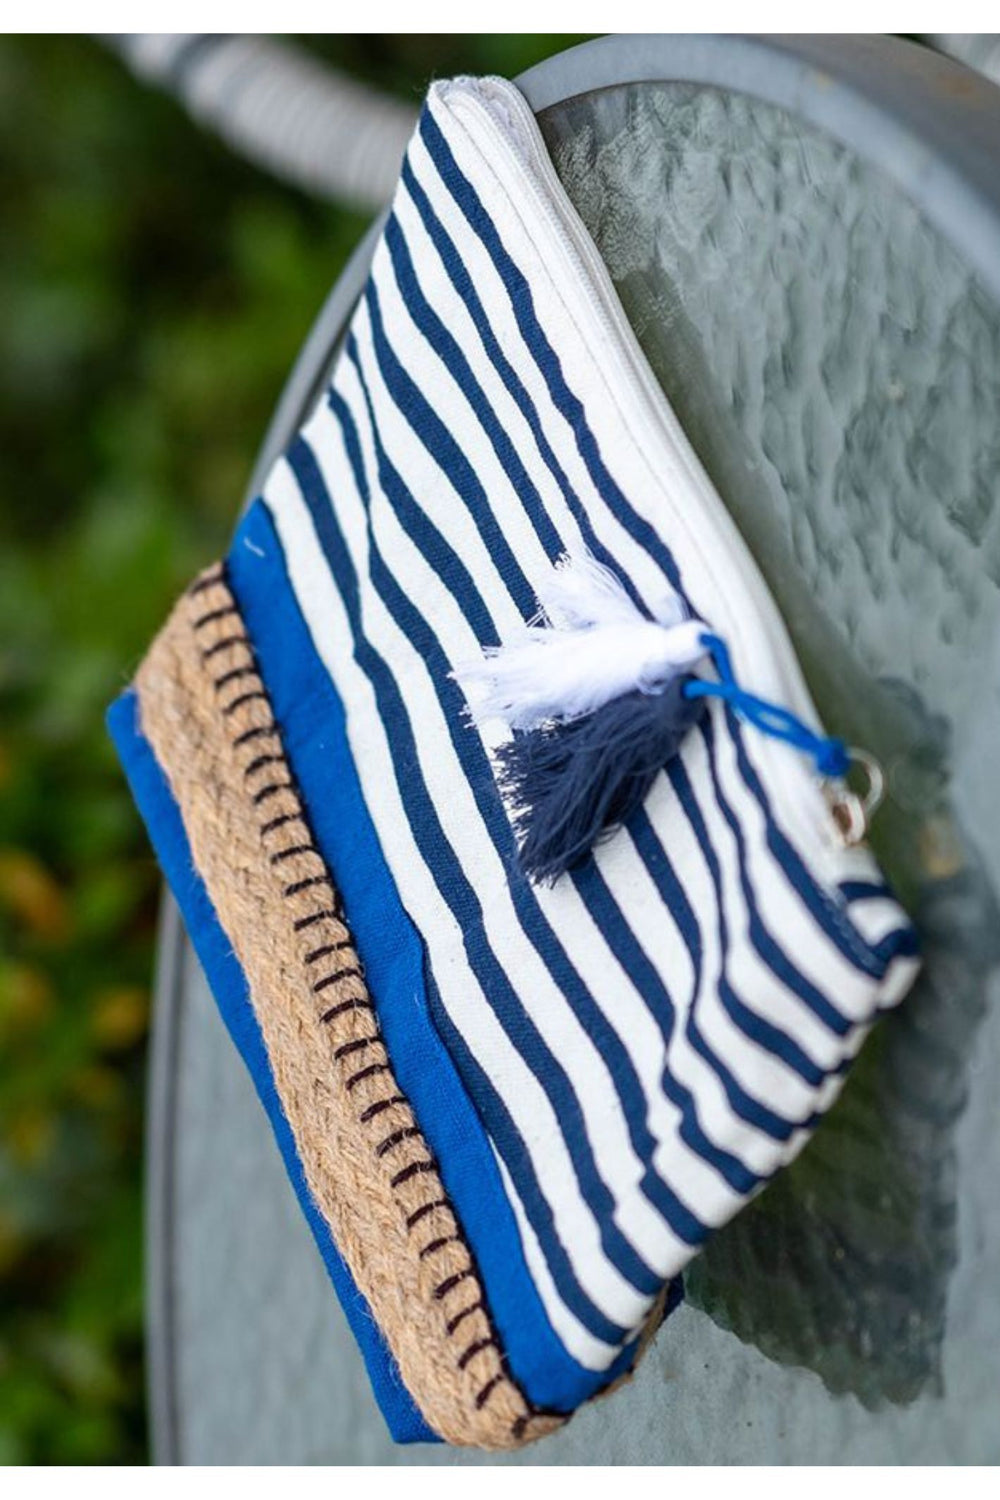 Navy White Striped Wash Bag With Blue Base - Sugarplum Boutique